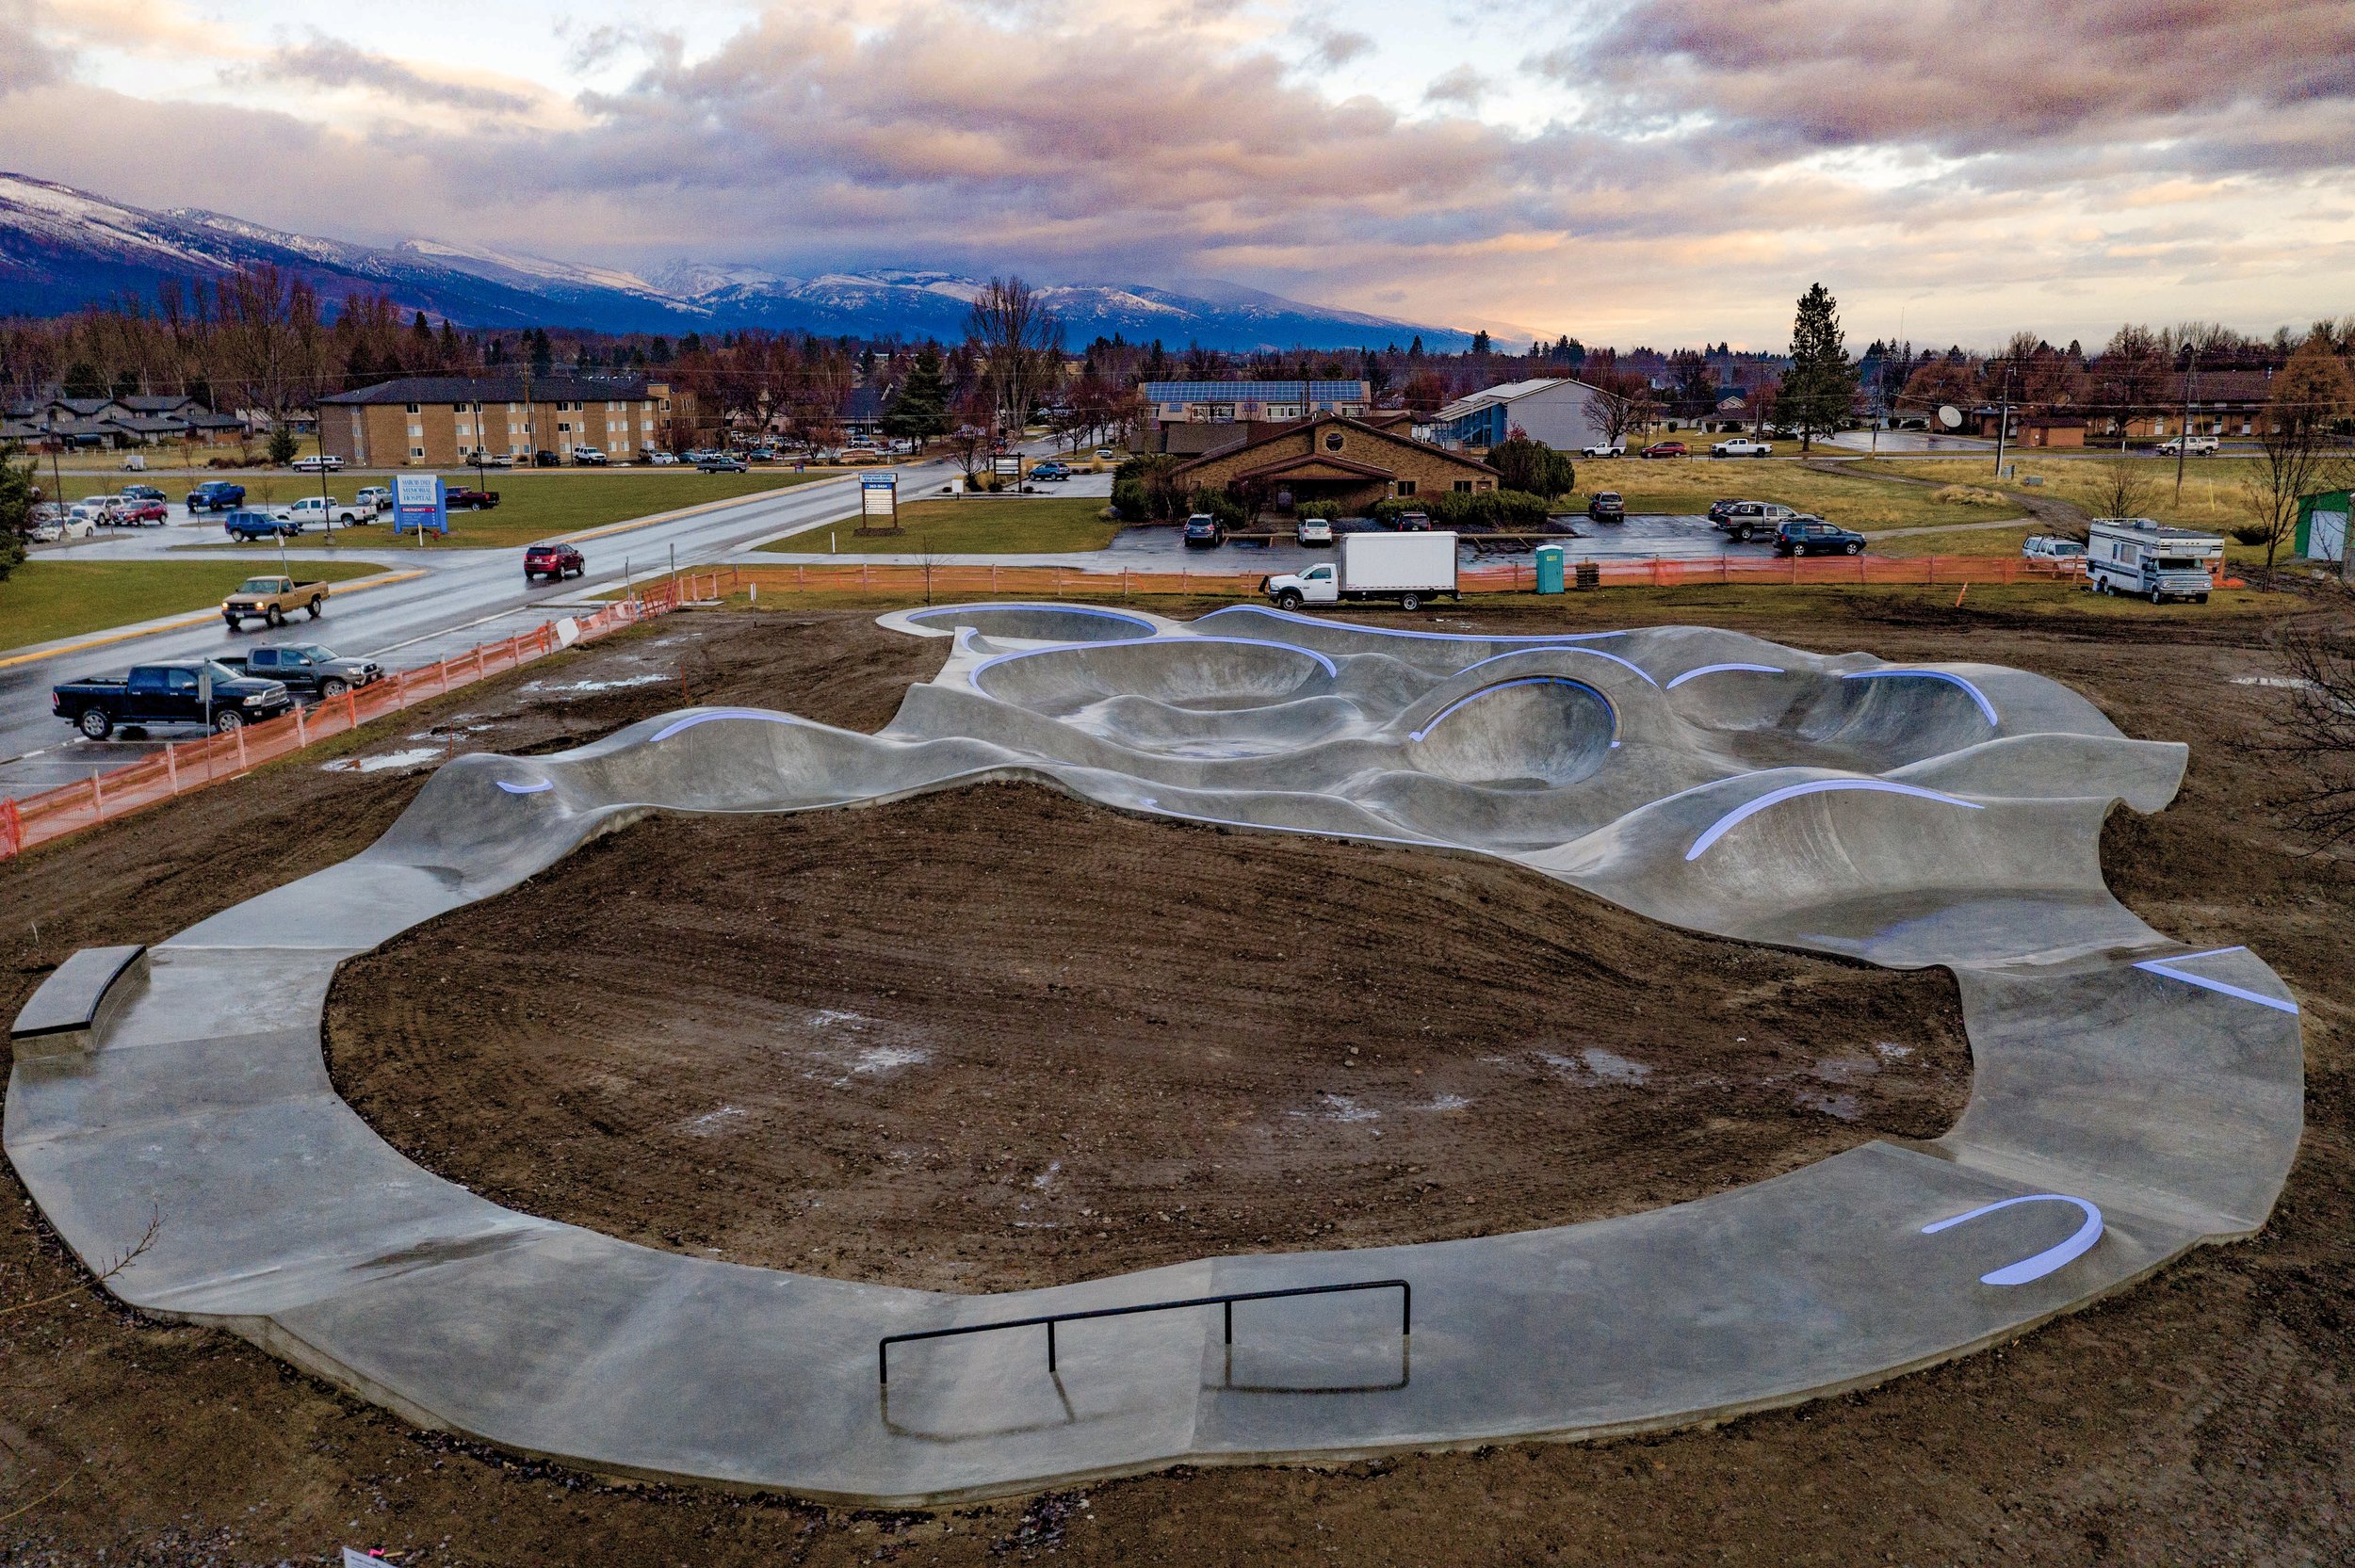 Hamilton, Montana 💯 she’s a dream. The circular ‘sprack Track’ keeps the momentum going ↔️ 